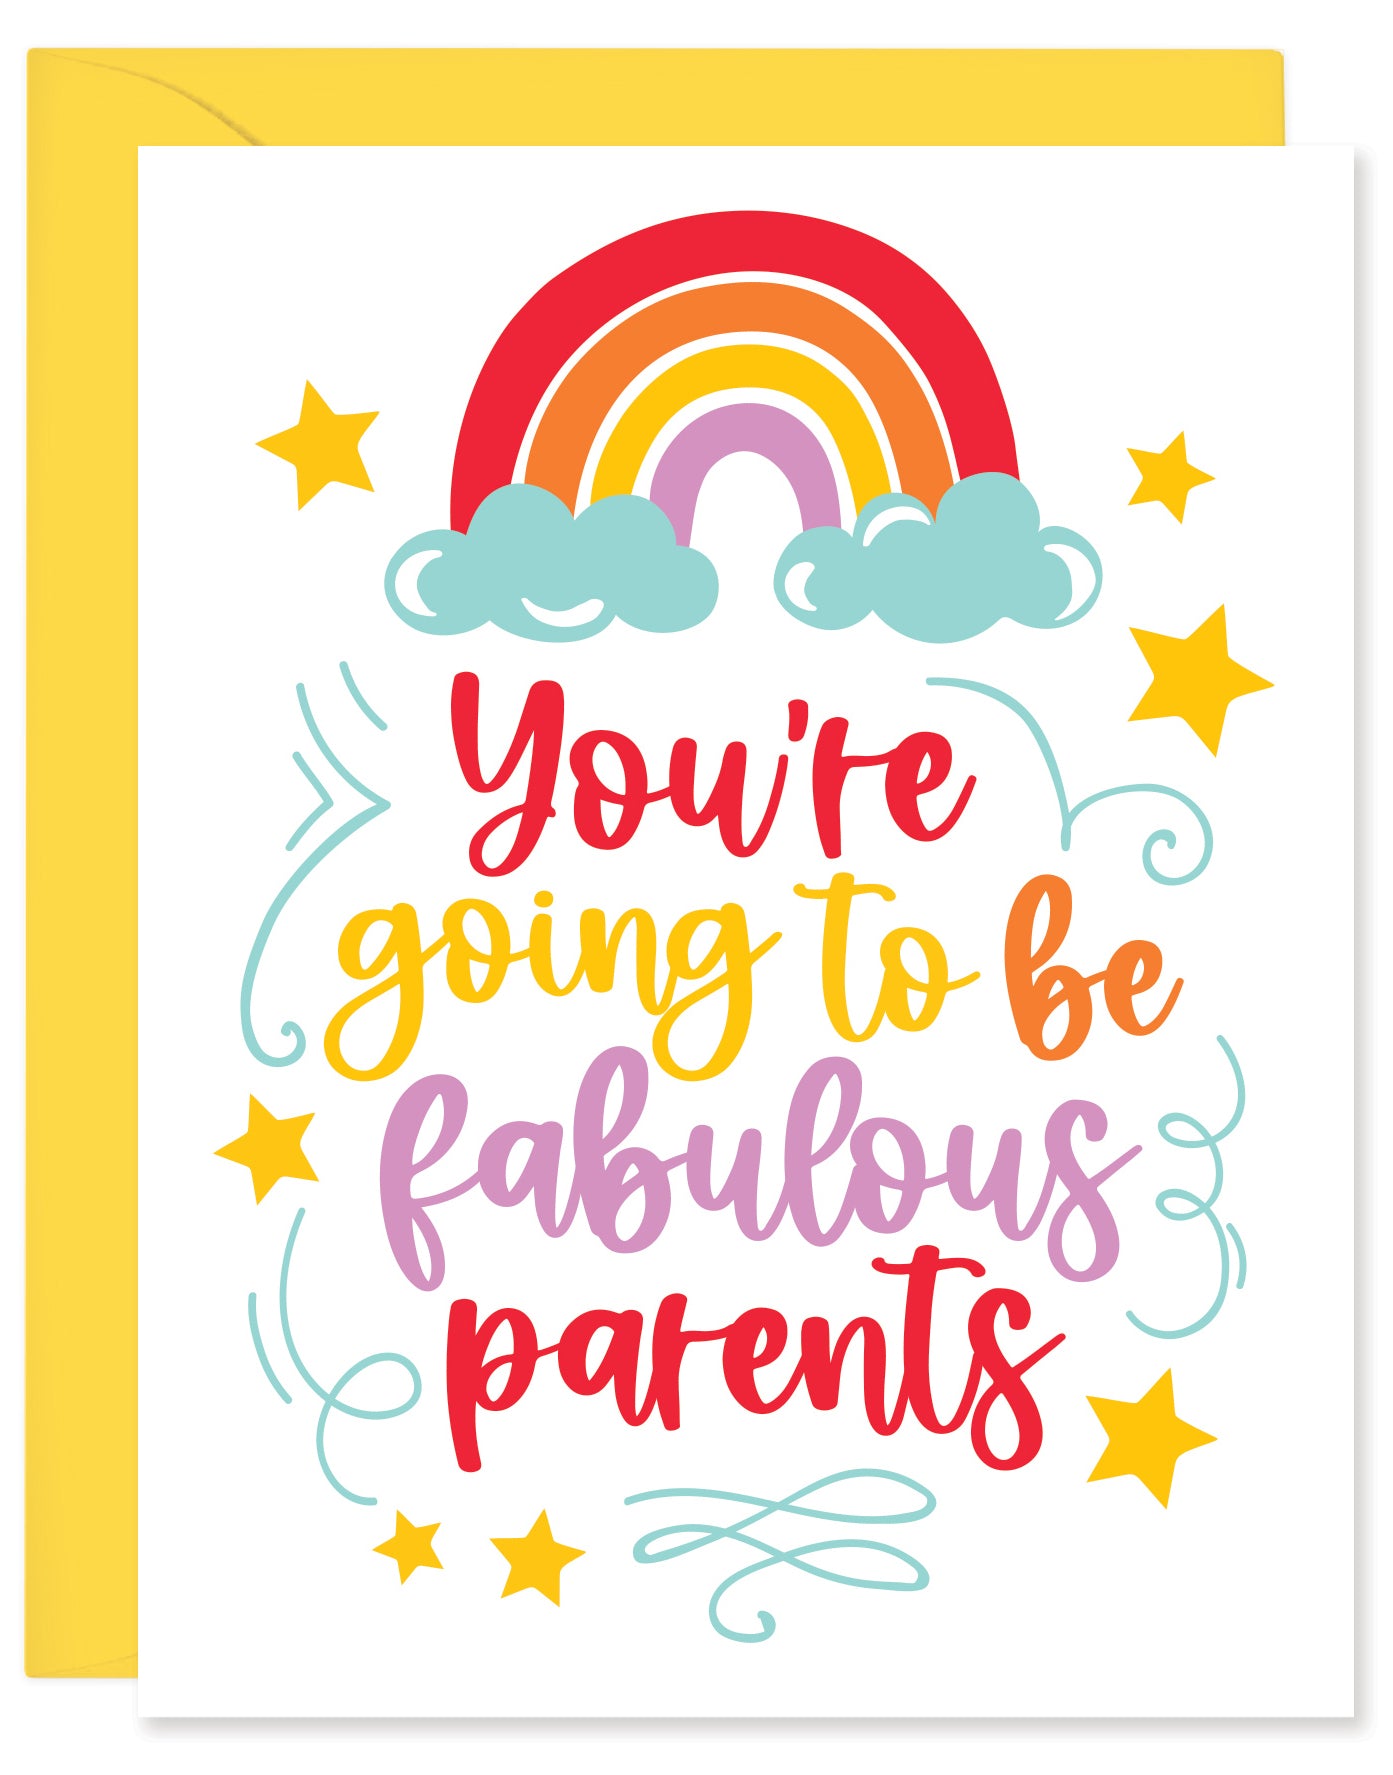 FABULOUS PARENTS CARD